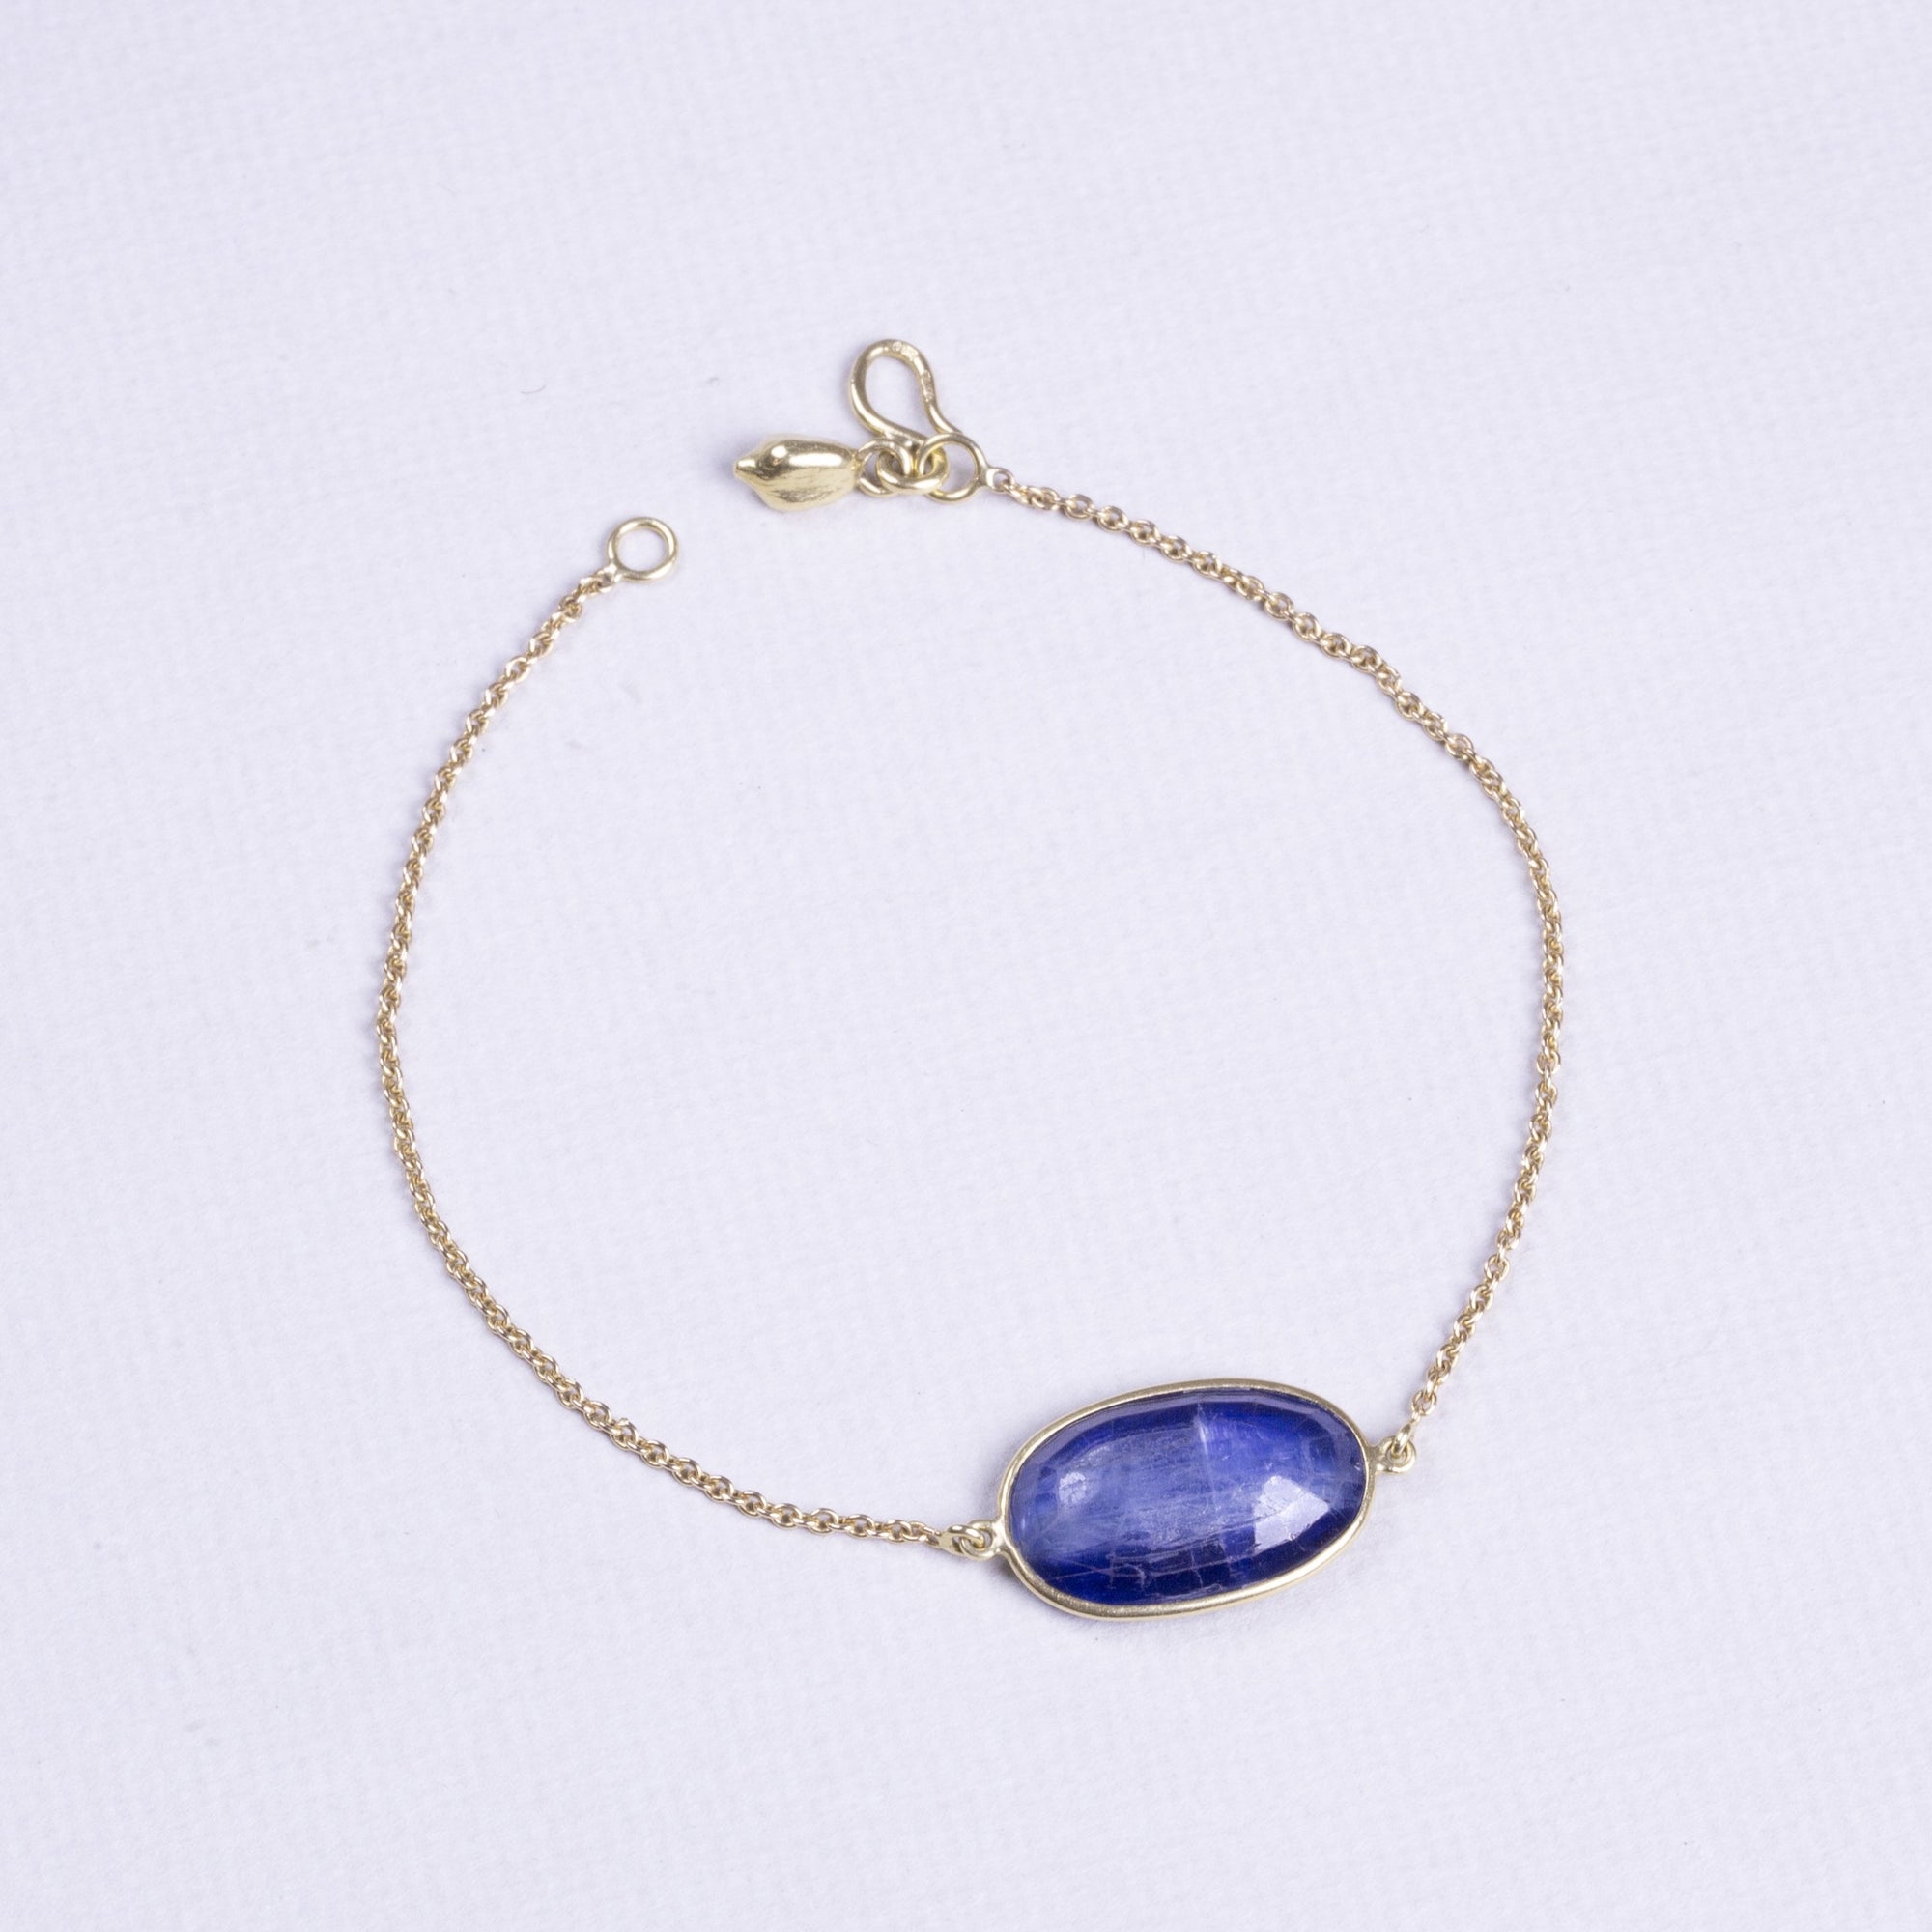 18ct Gold Bracelet with Lapis Lazuli